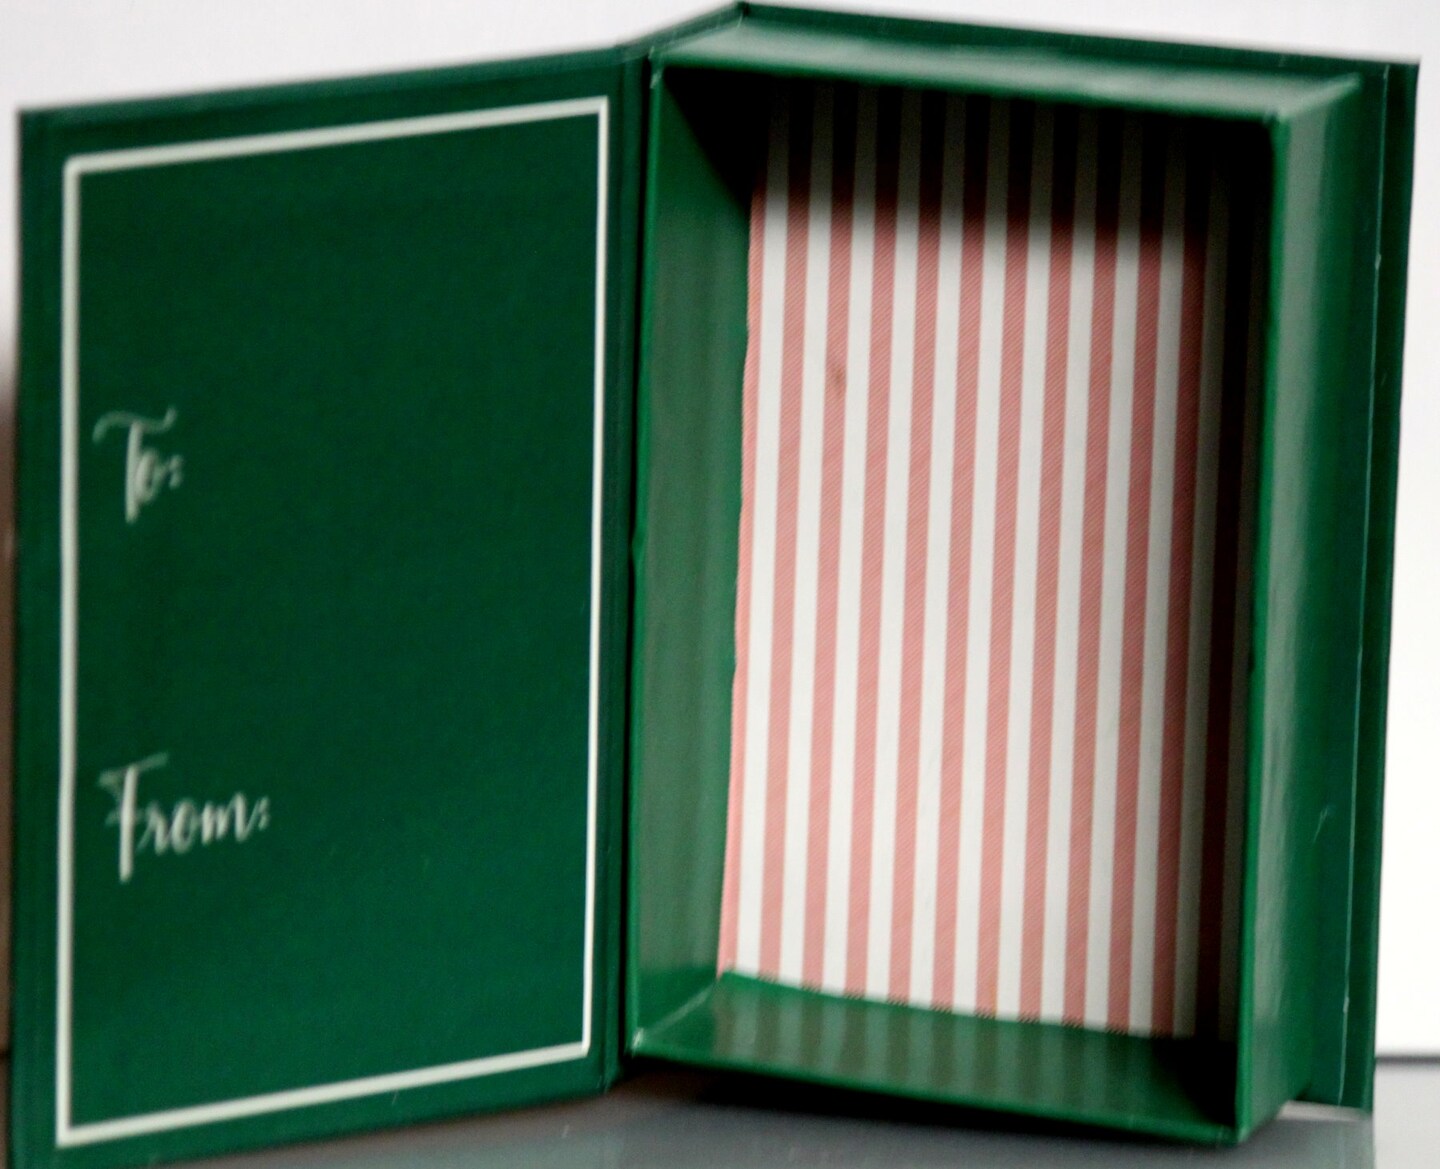 Merry Christmas Mistletoe Jewelry Or Gift Card Box